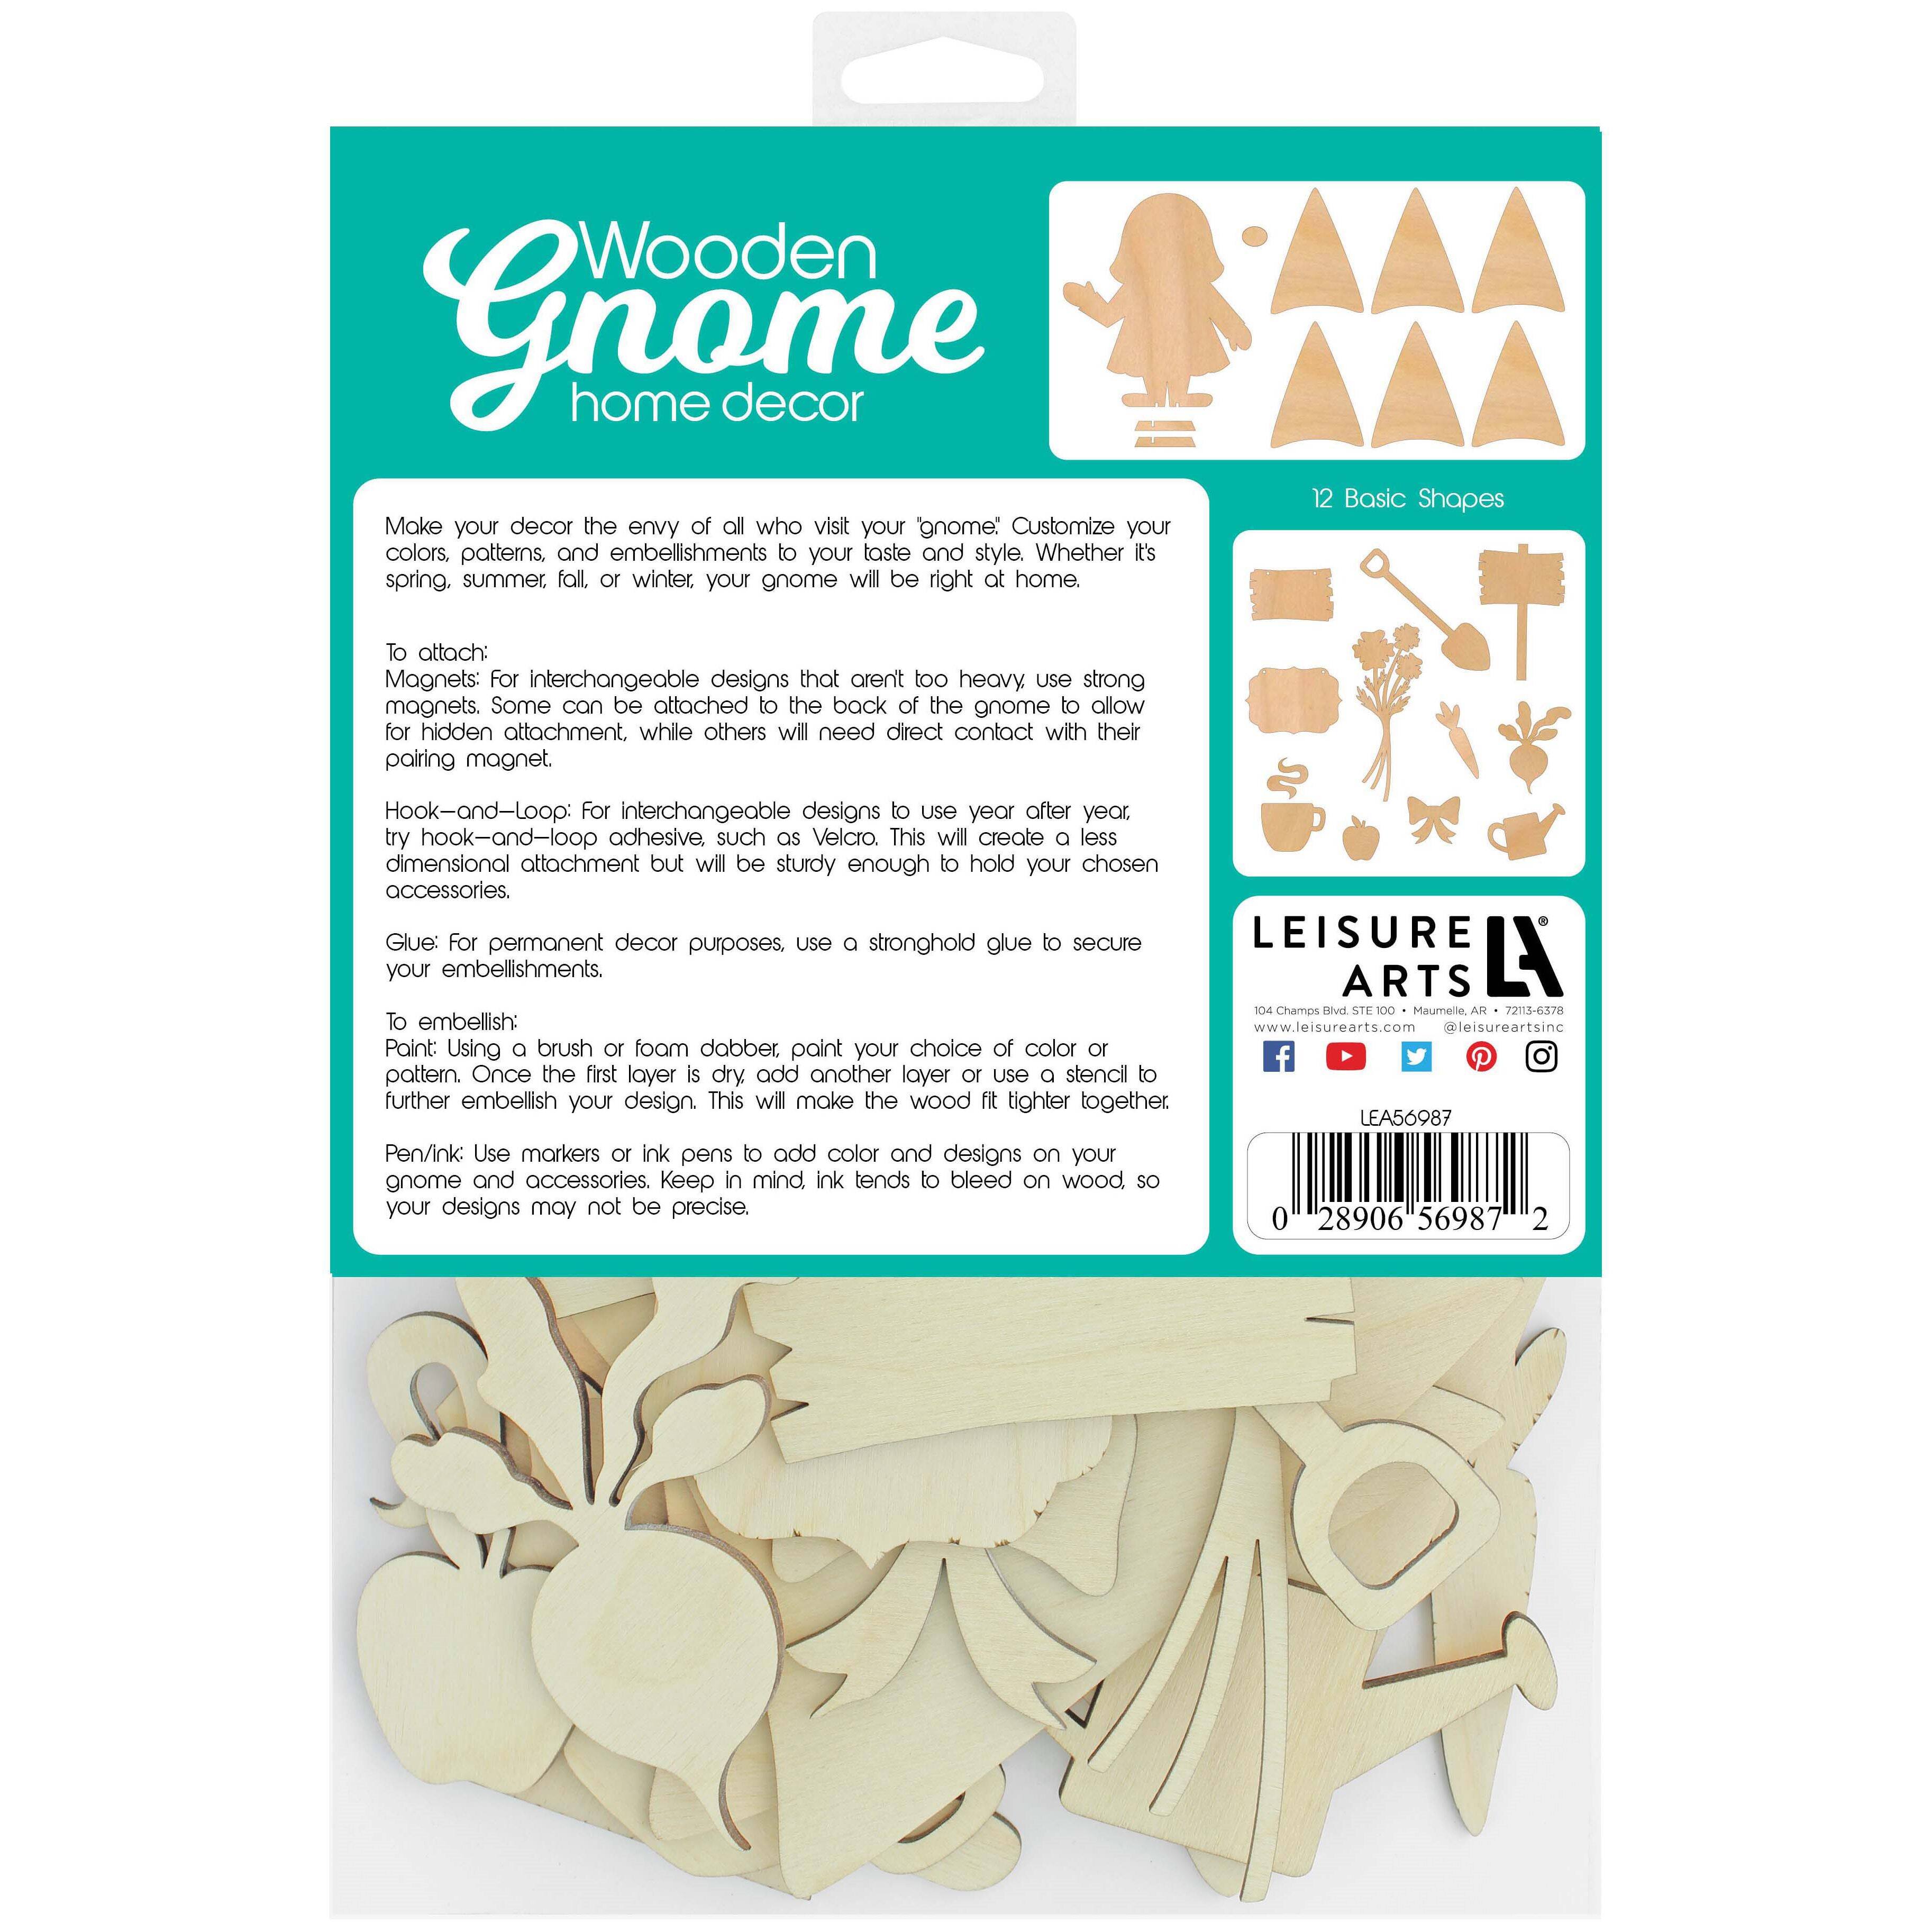 Leisure Arts&#xAE; Wooden Gnome Girl Basics Kit